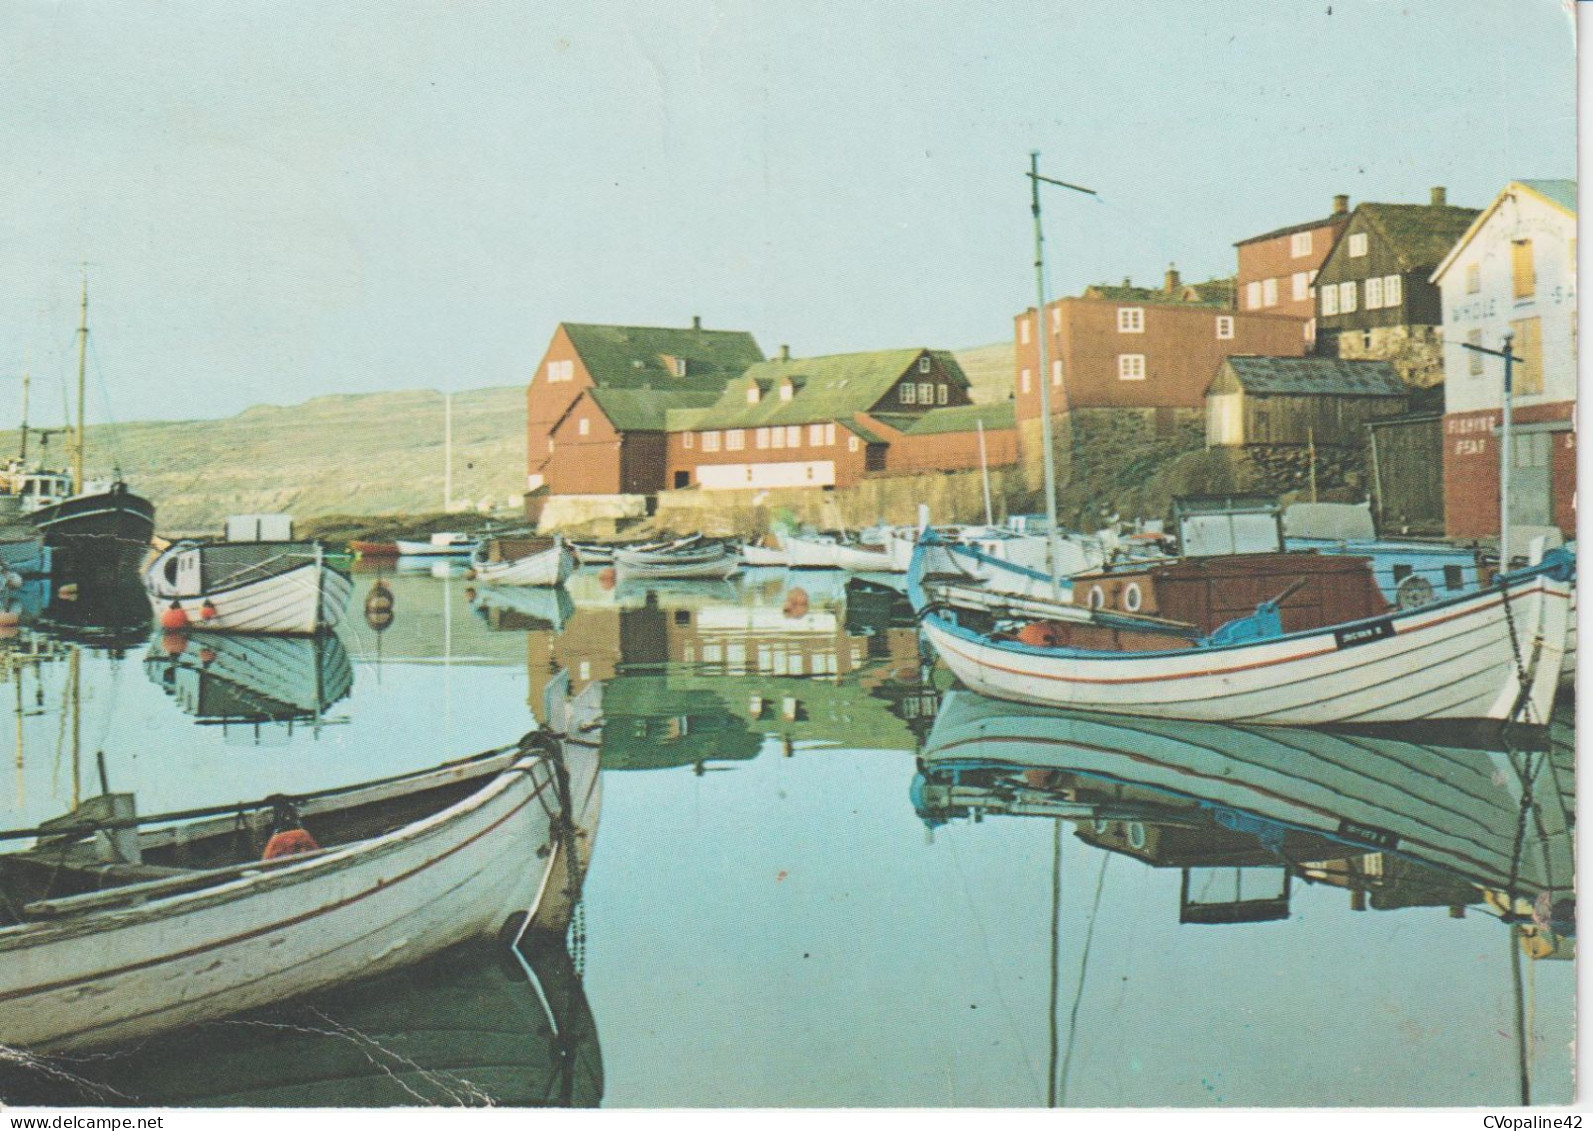 TINGANES (Faroe Islands - Iles Feroe) Daybrake Over Tinganes In 1973 - Islas Feroe